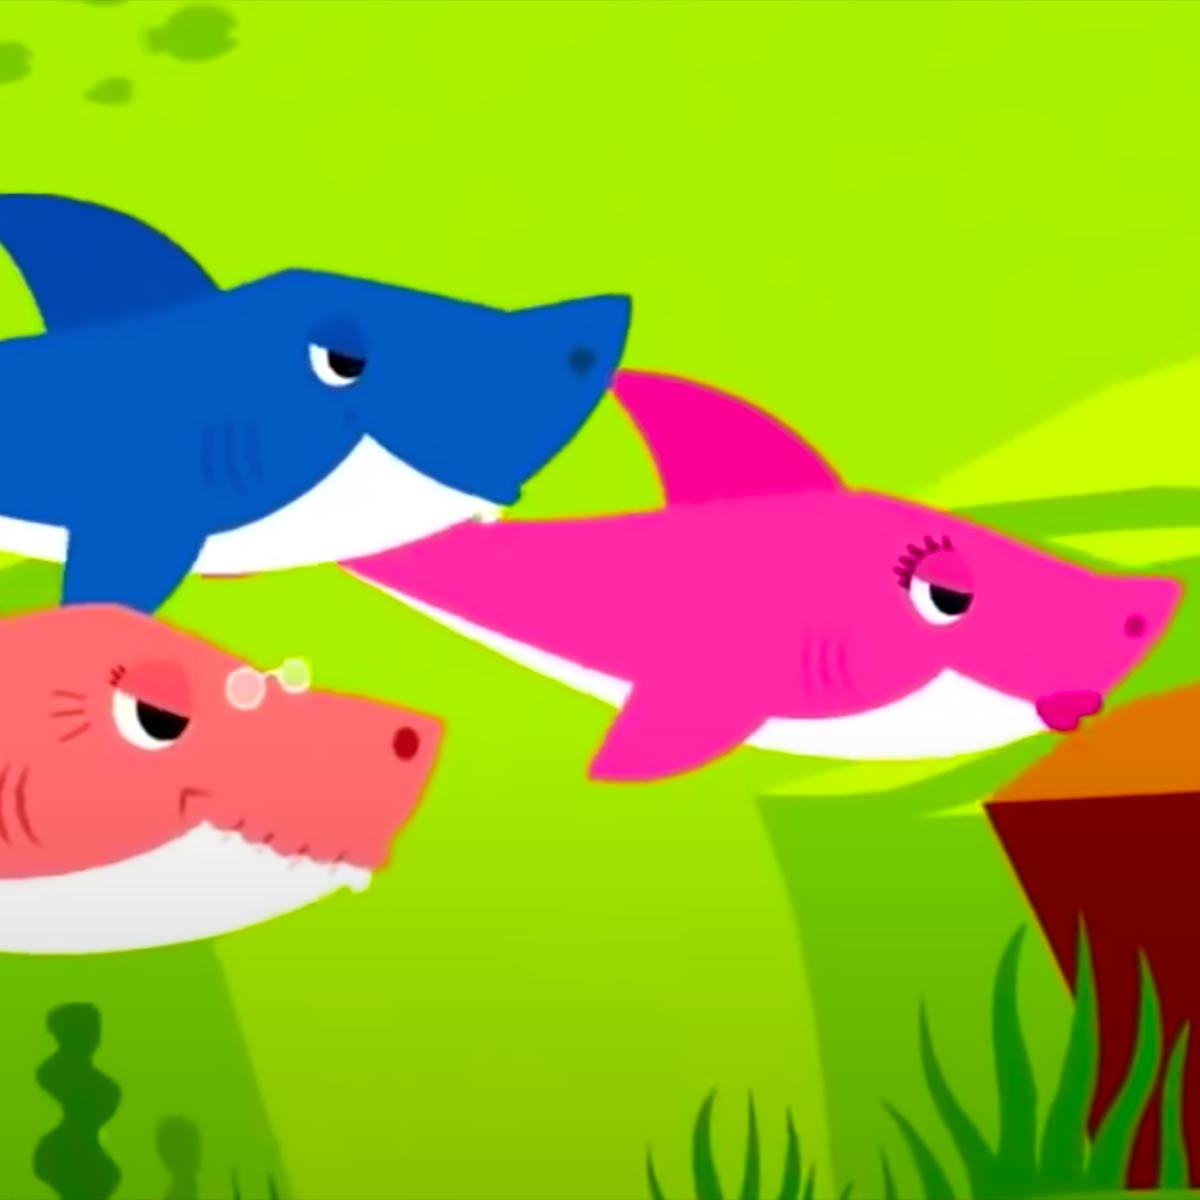 Play Baby Shark Piano Music Sheet On Virtual Piano - baby shark roblox id that really works